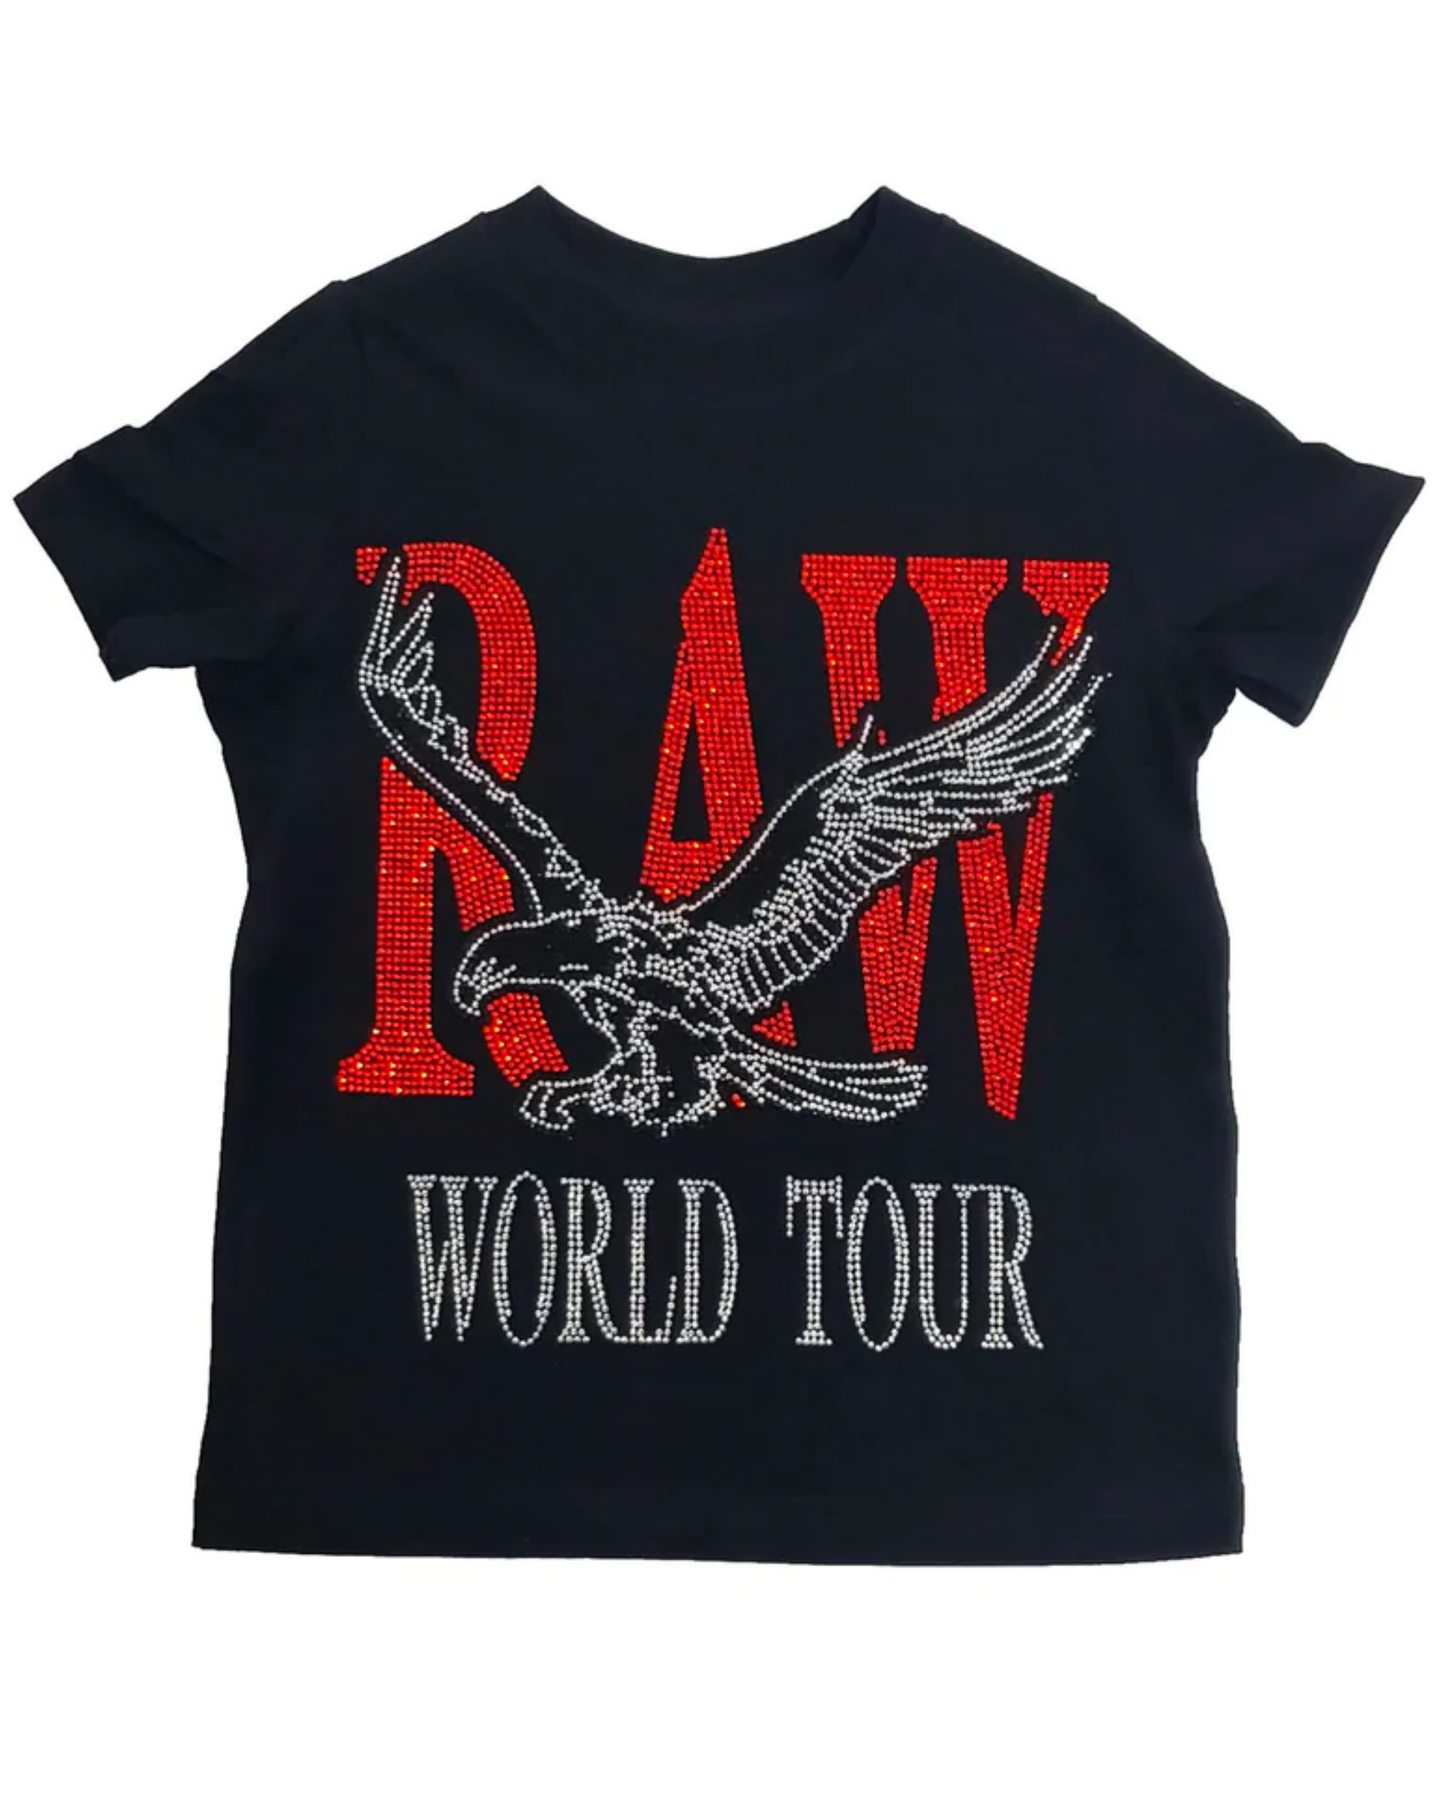 Kids World Tour Bling Shirt